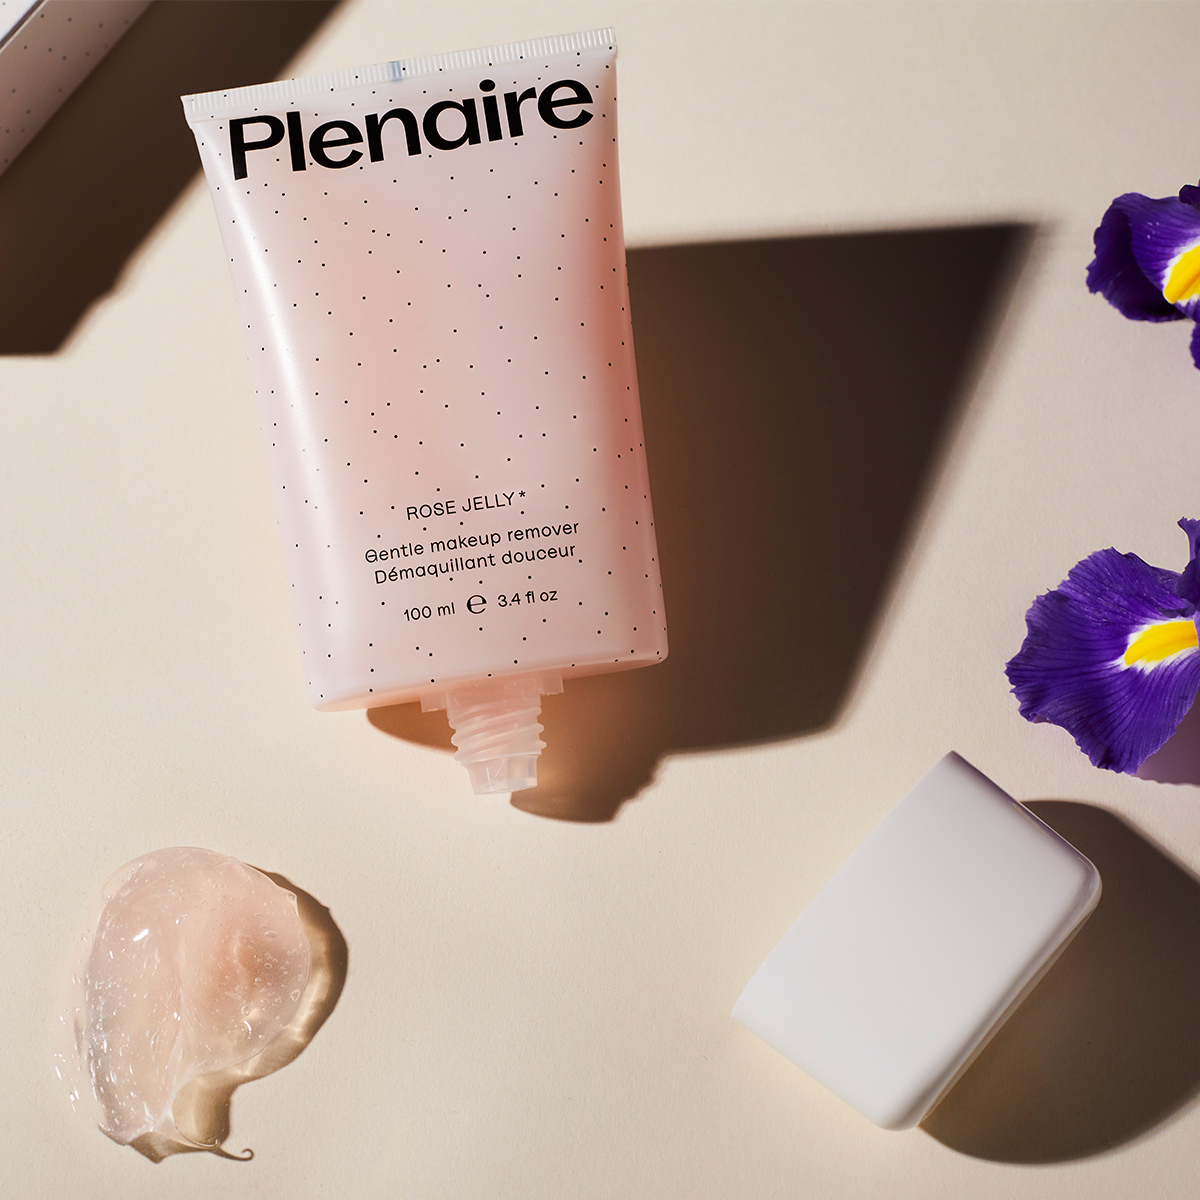 Plenaire - Rose Jelly* Gentle Makeup Remover